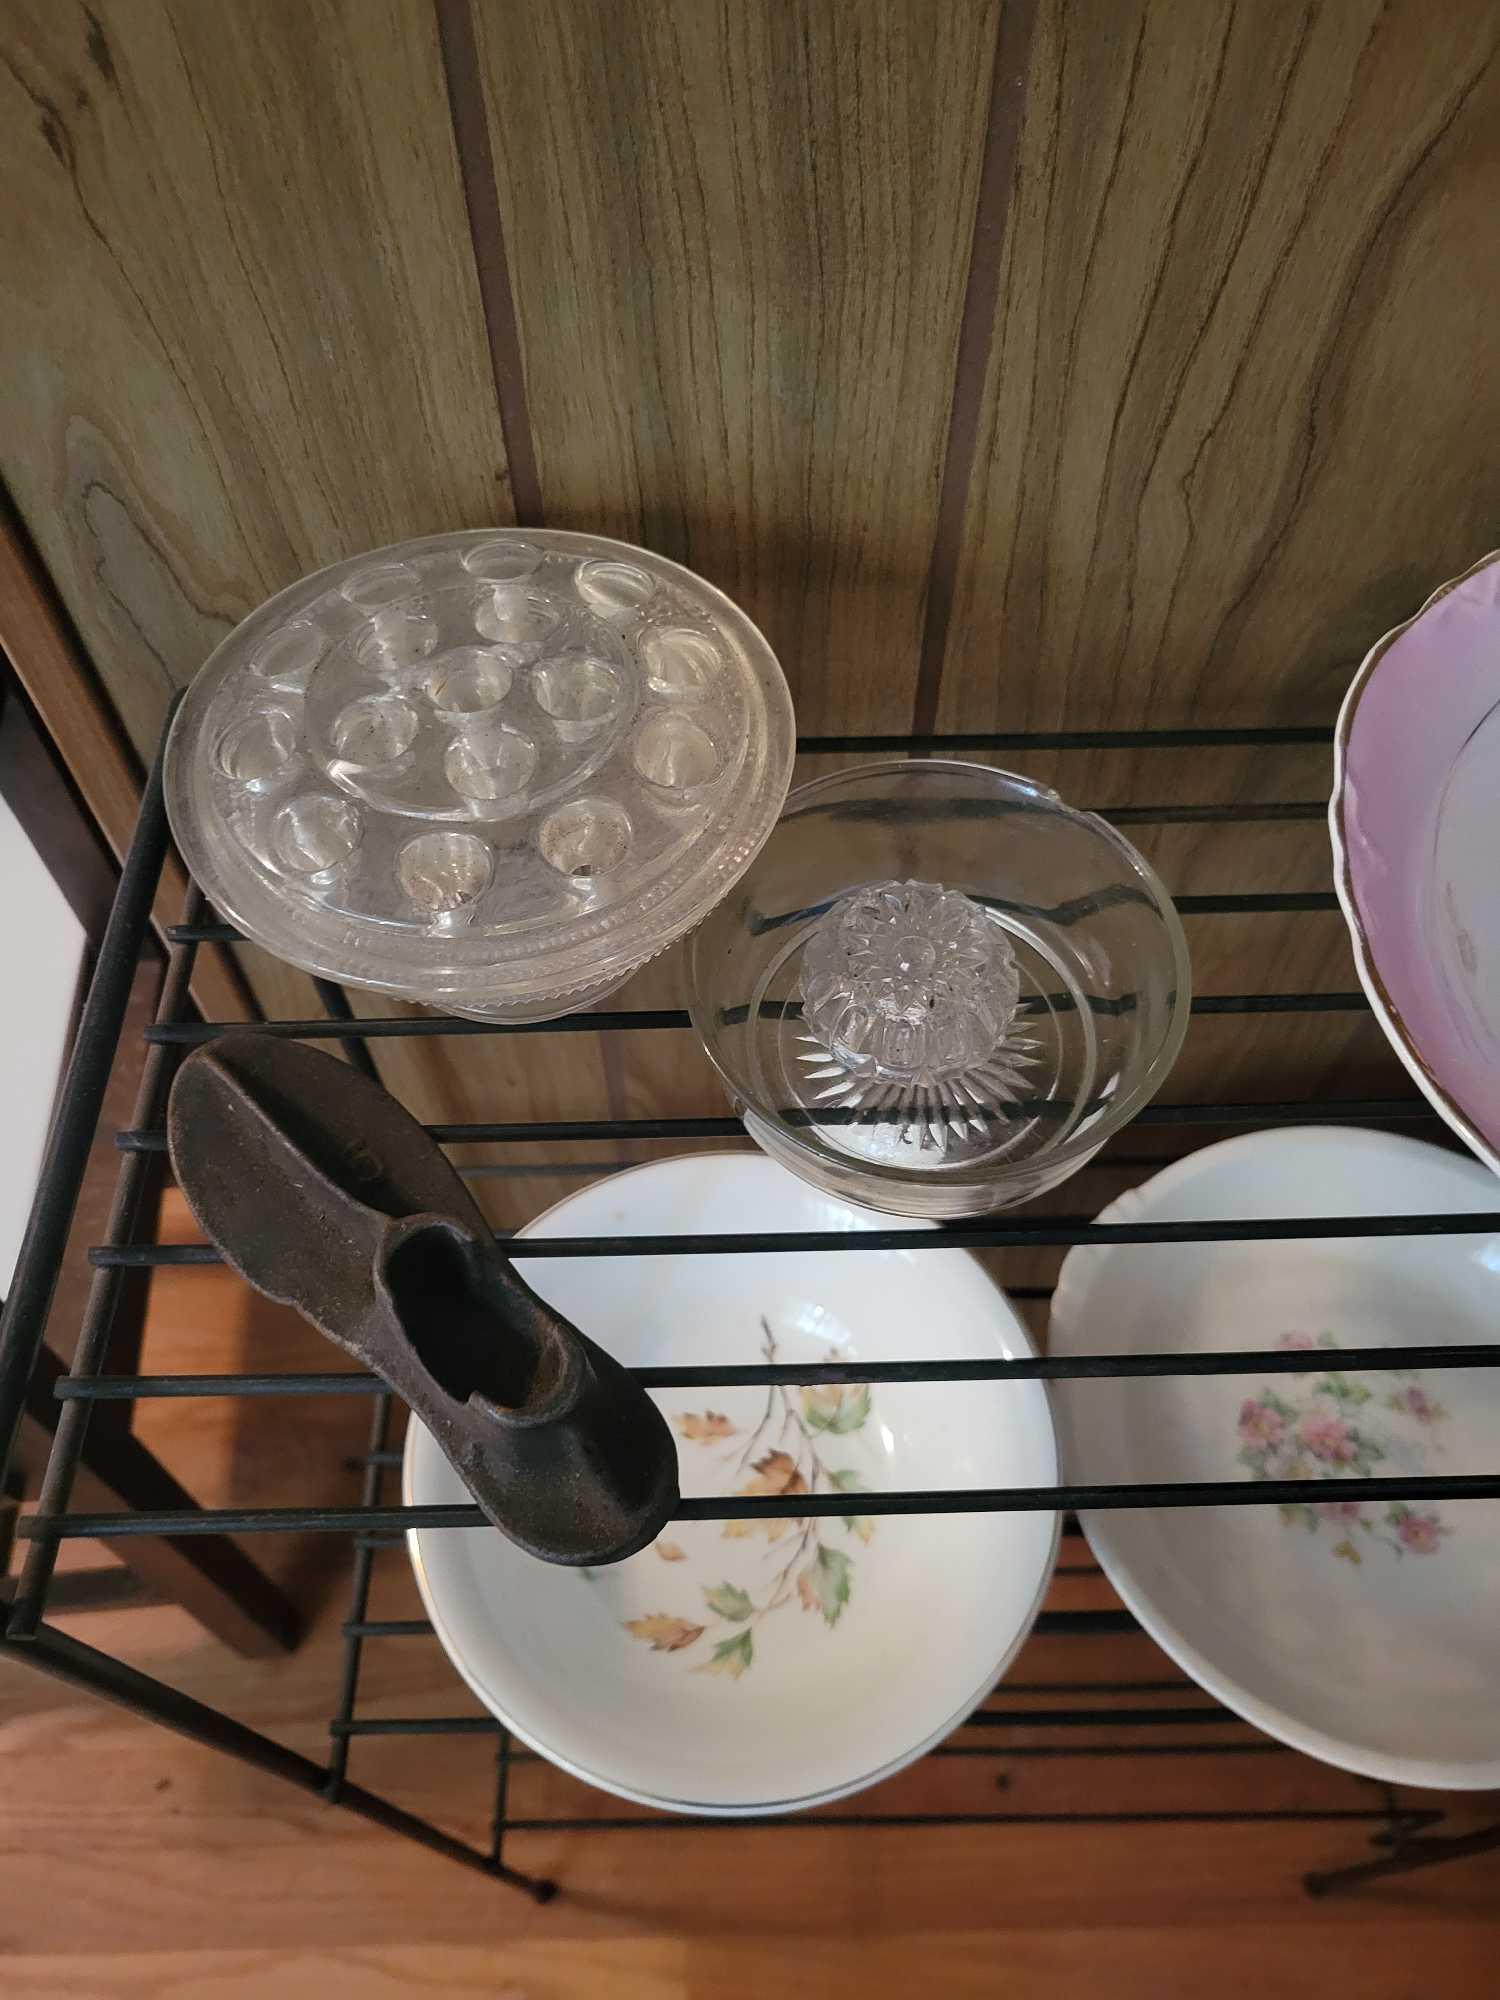 Vintage Dishes Bowls Mugs Candy Dish